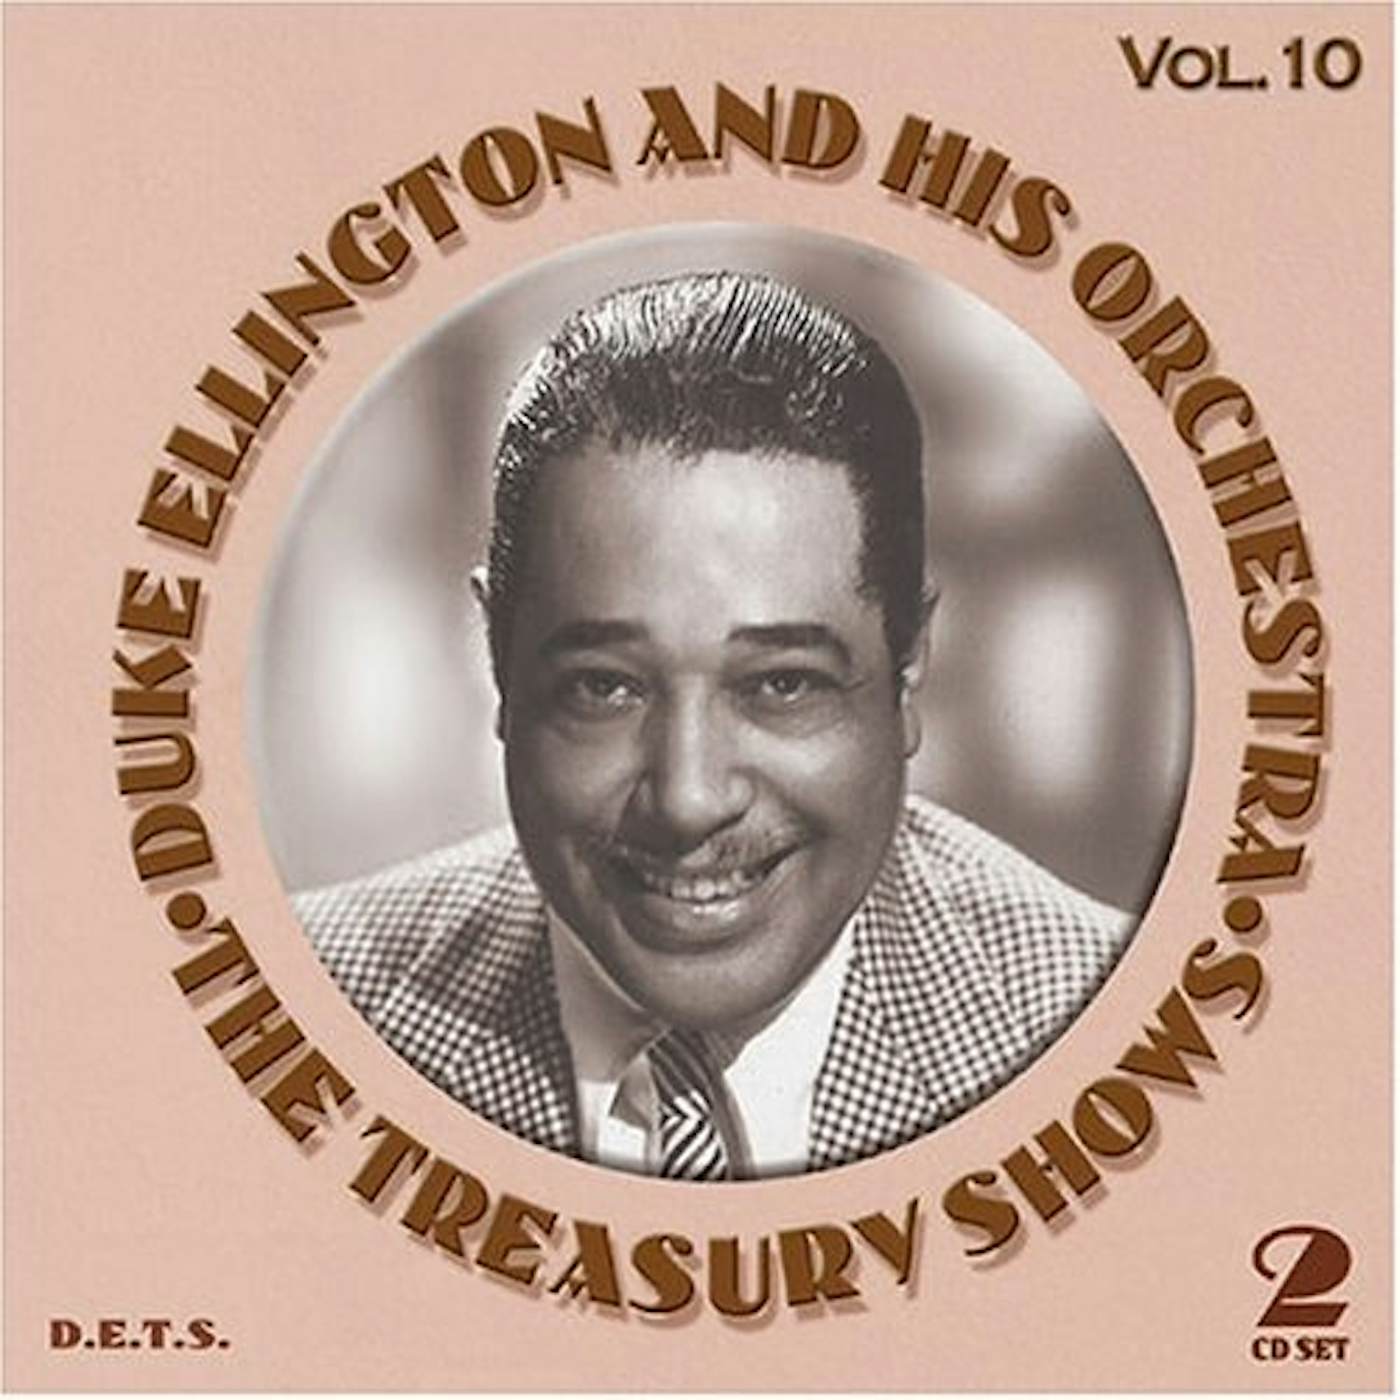 Duke Ellington TREASURY SHOWS 10 CD